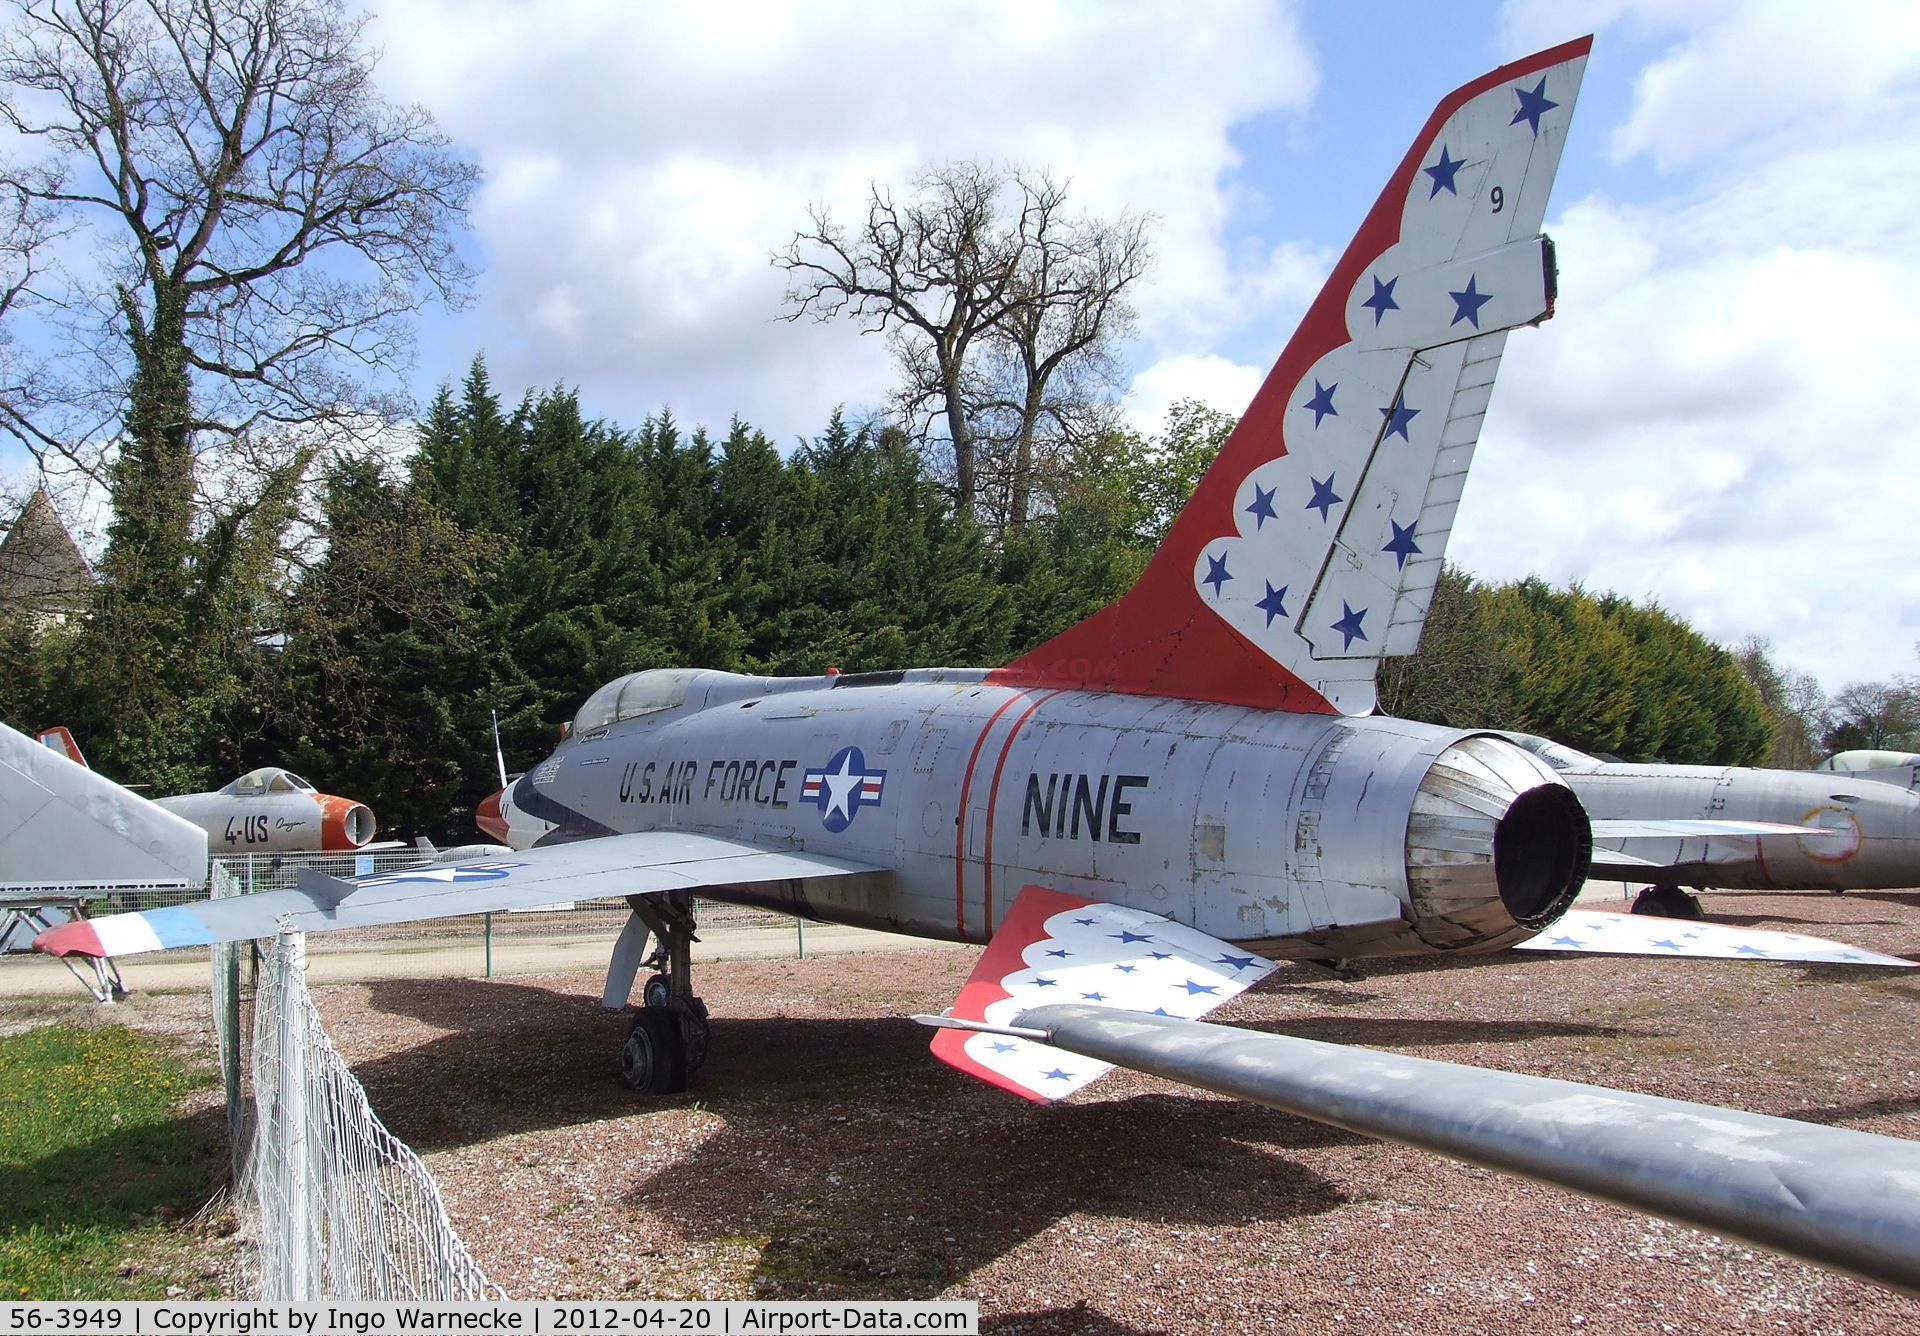 56-3949, 1956 North American TF-100F Super Sabre C/N 243-225, North American TF-100F Super Sabre (displayed as Thunderbirds Nine) at the Musee de l'Aviation du Chateau, Savigny-les-Beaune